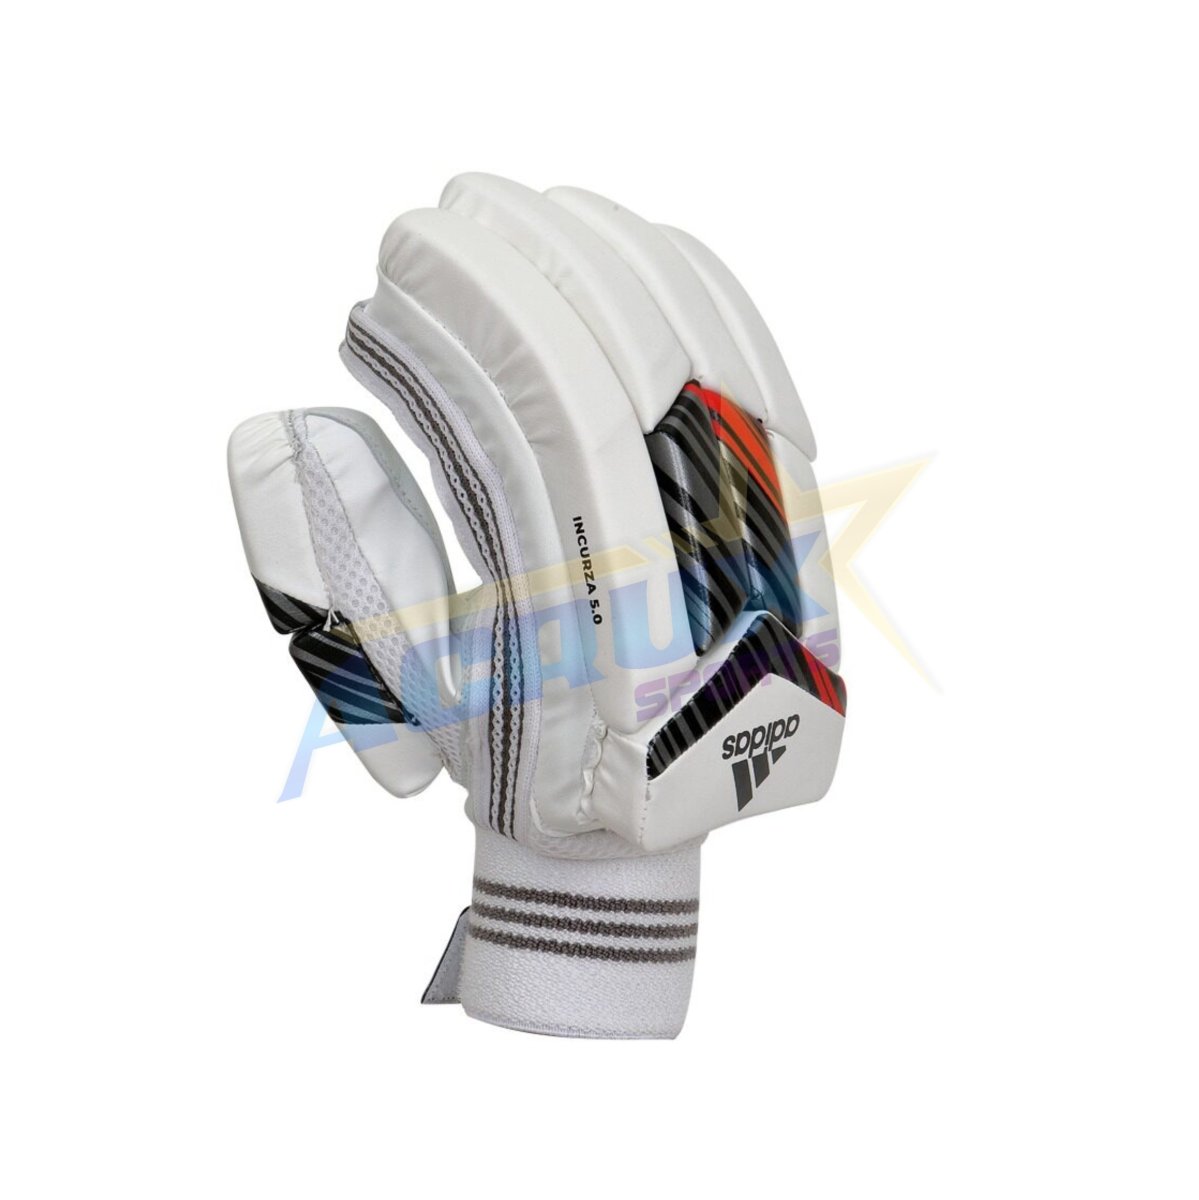 Adidas Incurza 5.0 Cricket Batting Gloves